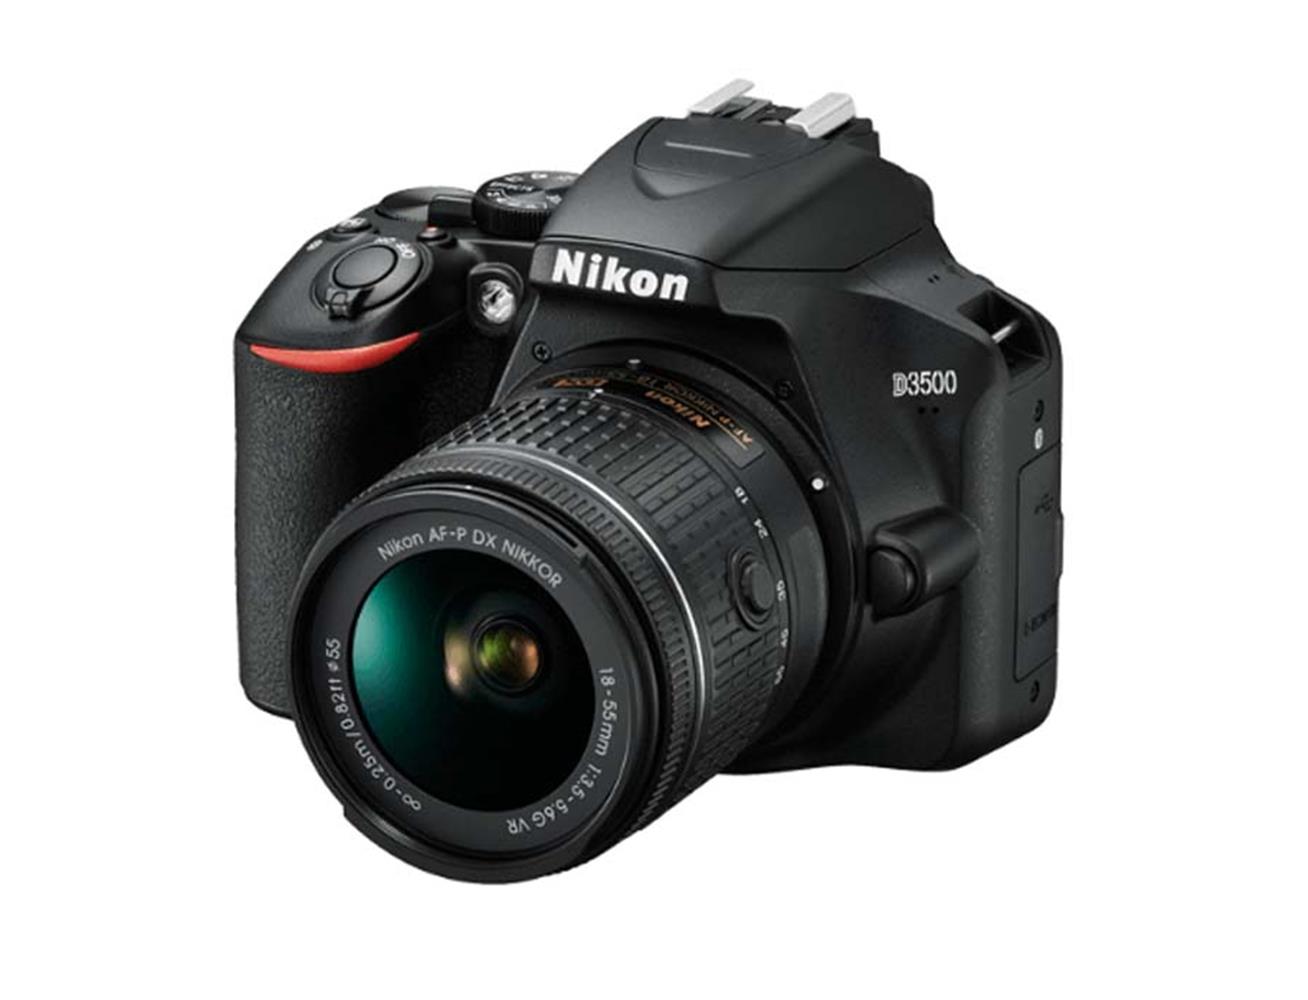 Buy Nikon D3500 VR Kit with 18-55 mm Lens Online in Kuwait, Best Price